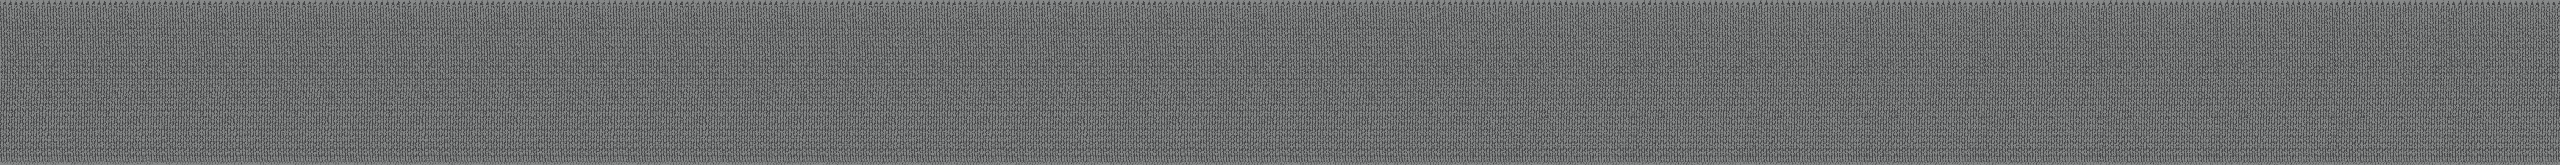 elastic band gray